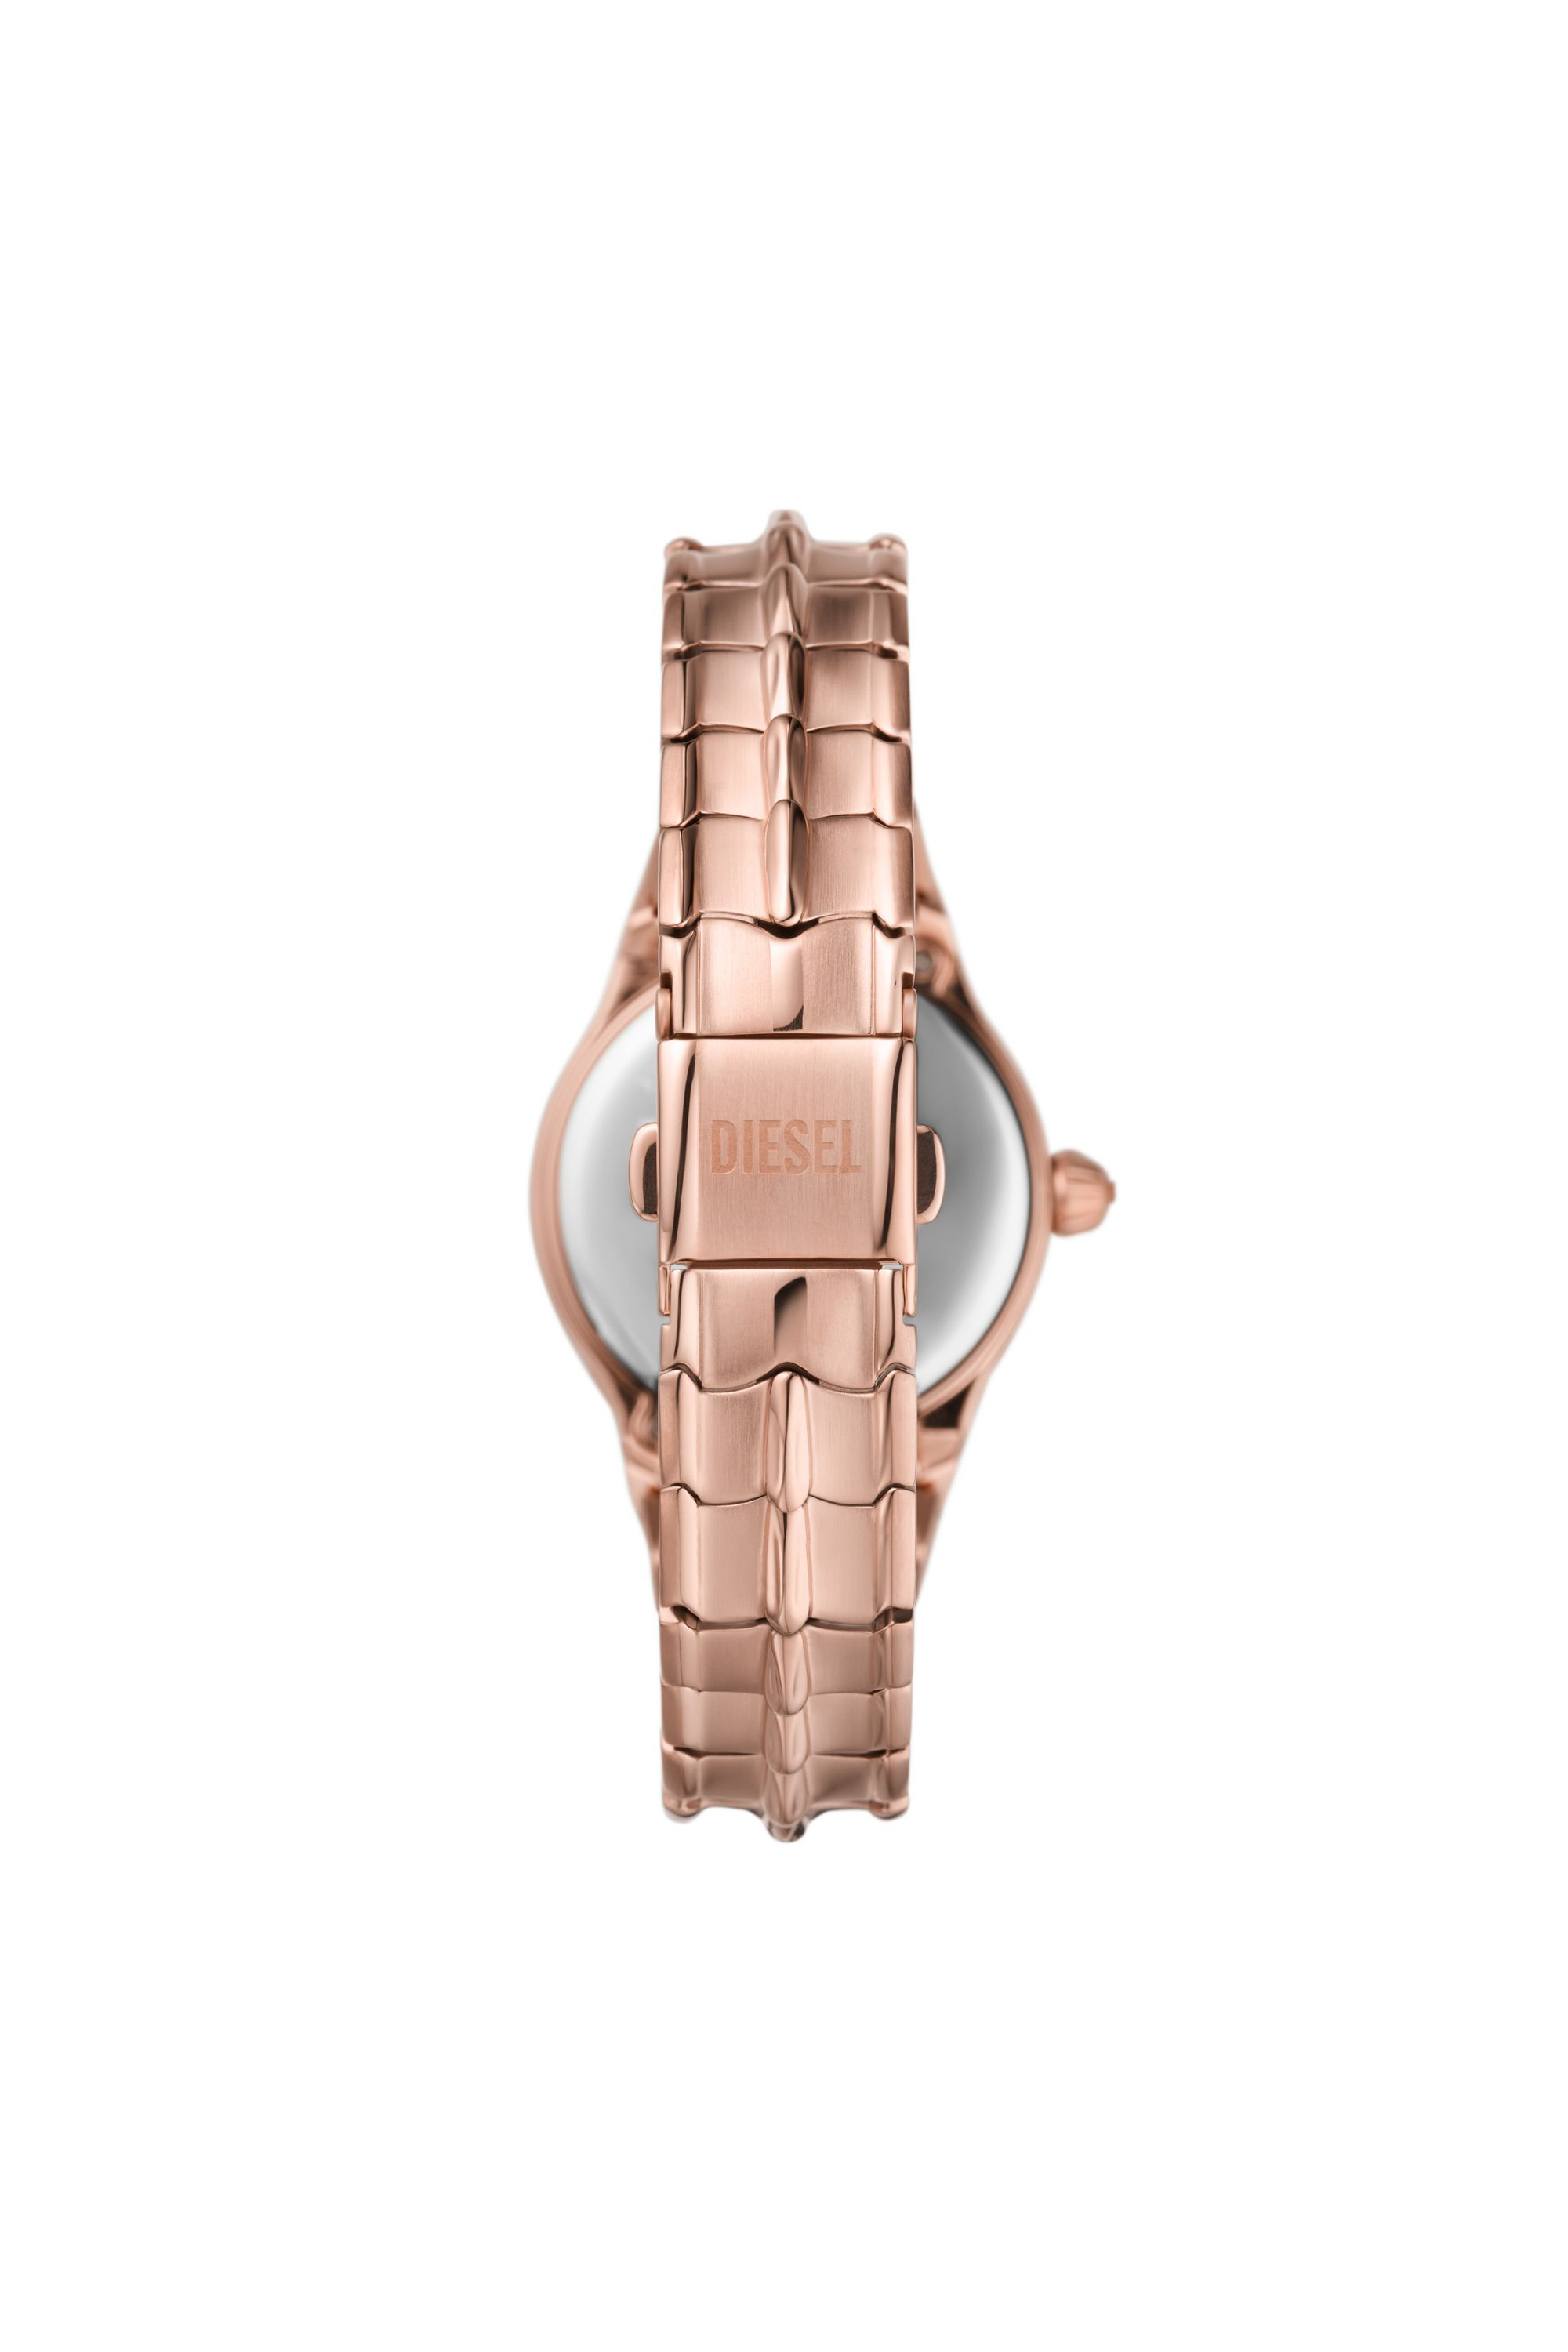 Diesel - DZ5604, Female Vert three-hand rose gold-tone stainless steel watch in Pink - Image 2